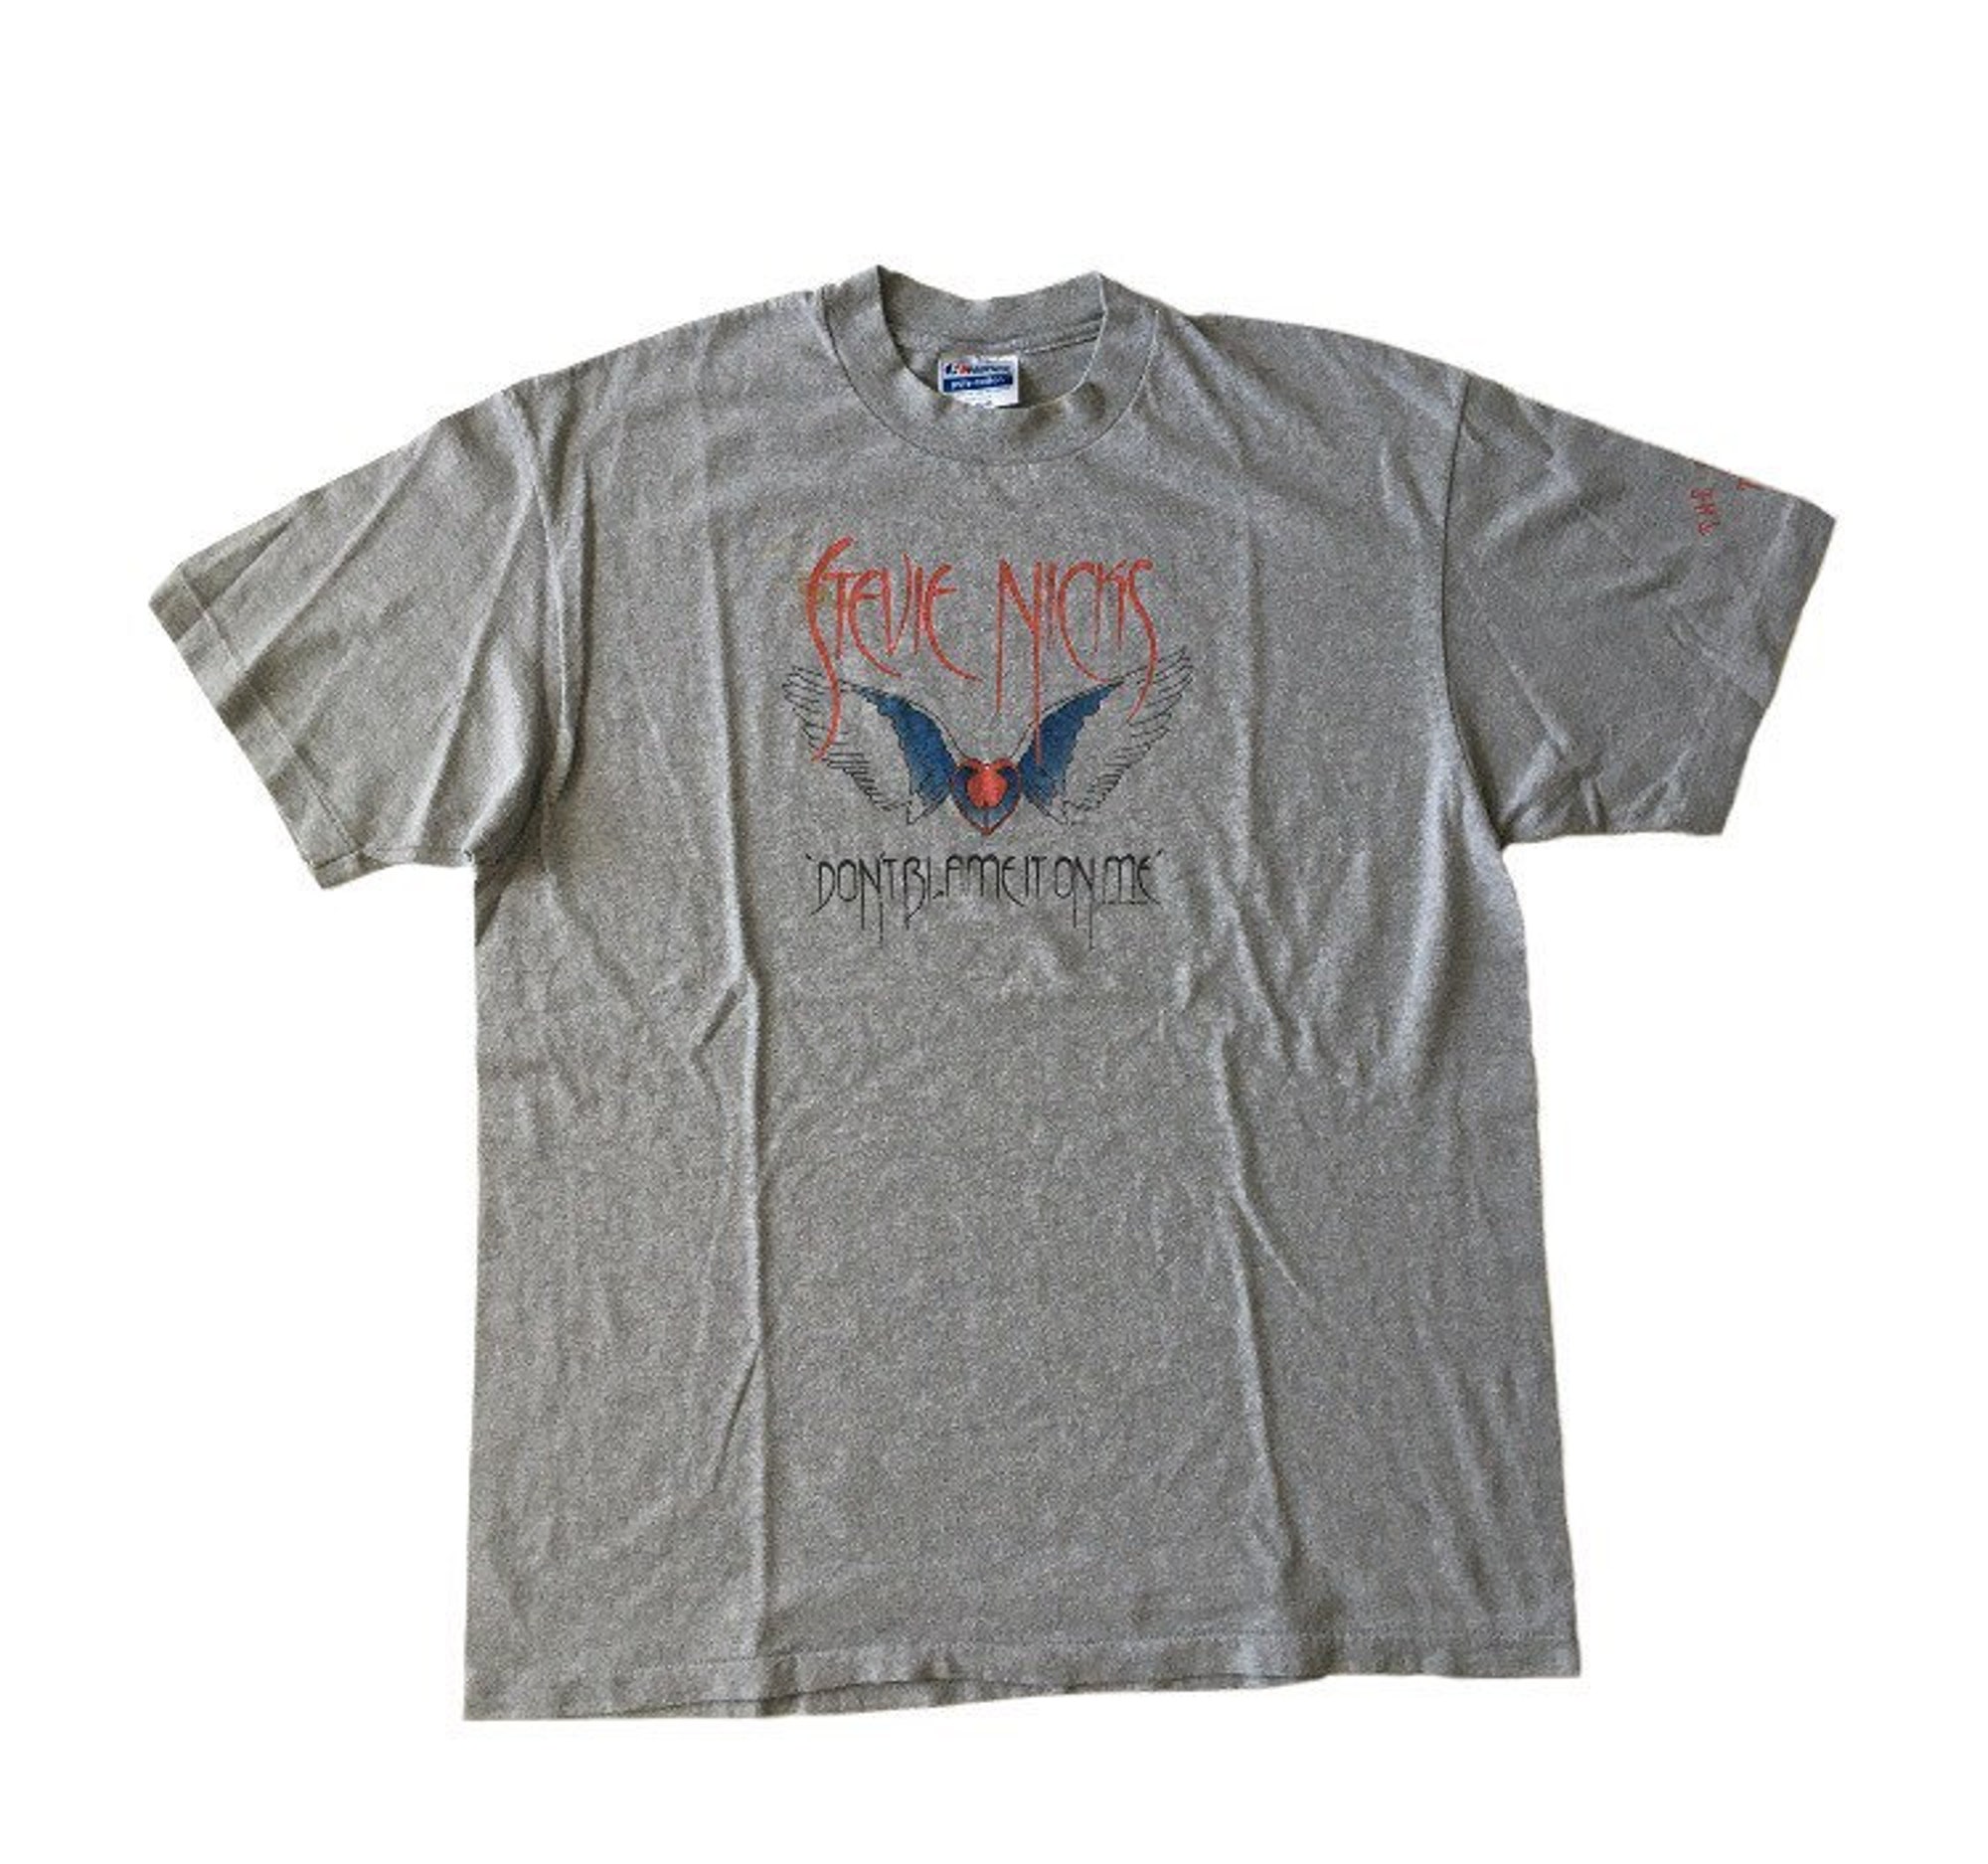 Vintage 80s Stevie Nicks Wild Heart Best of 1991 Tour T-Shirt